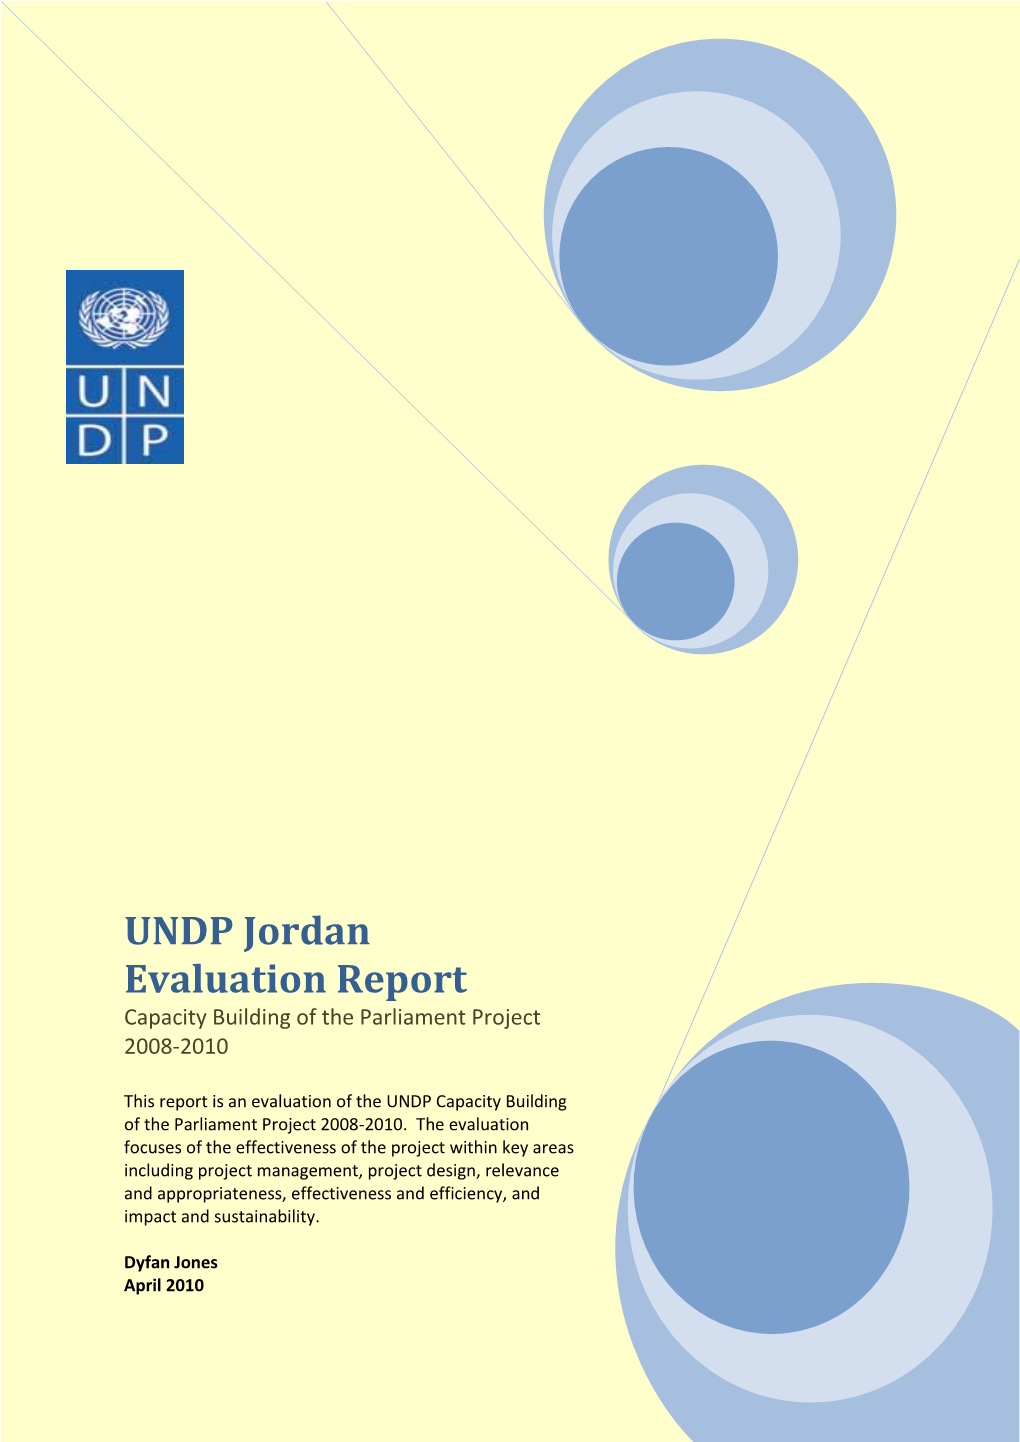 UNDP Jordan Parliament Project Evaluation Report 2010